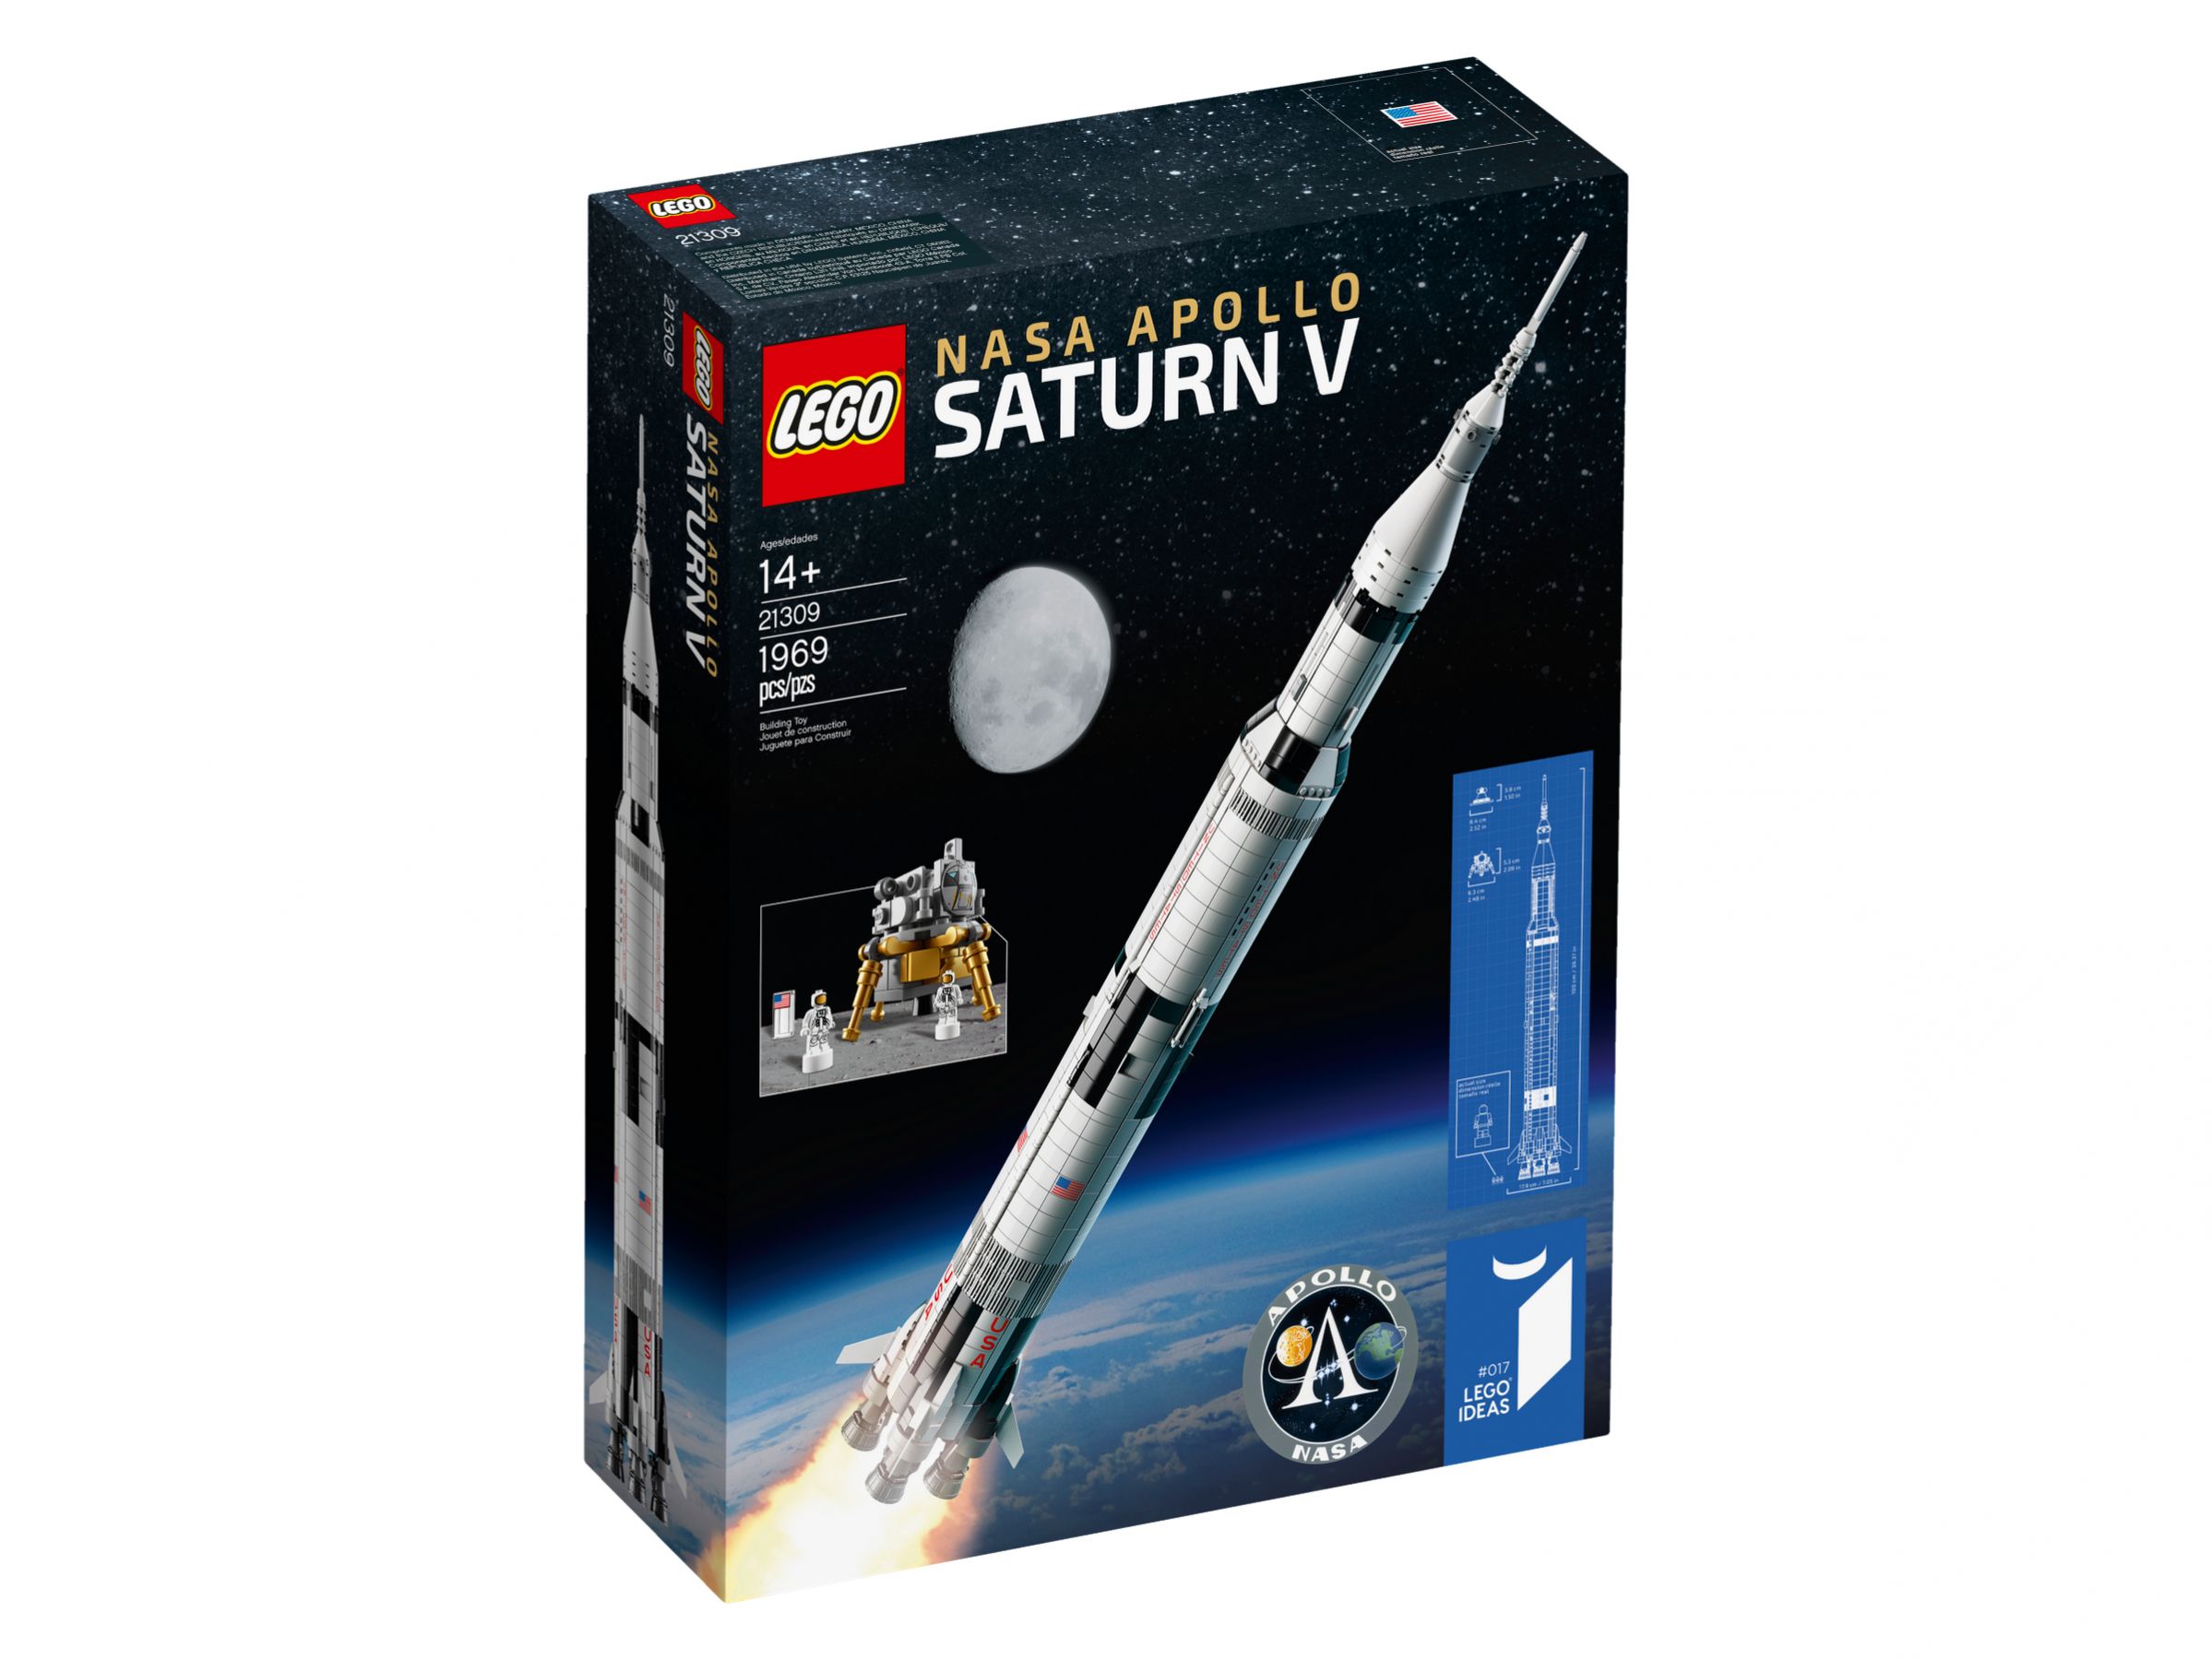 LEGO Ideas 21309 LEGO® NASA Apollo Saturn V LEGO_21309_alt1.jpg